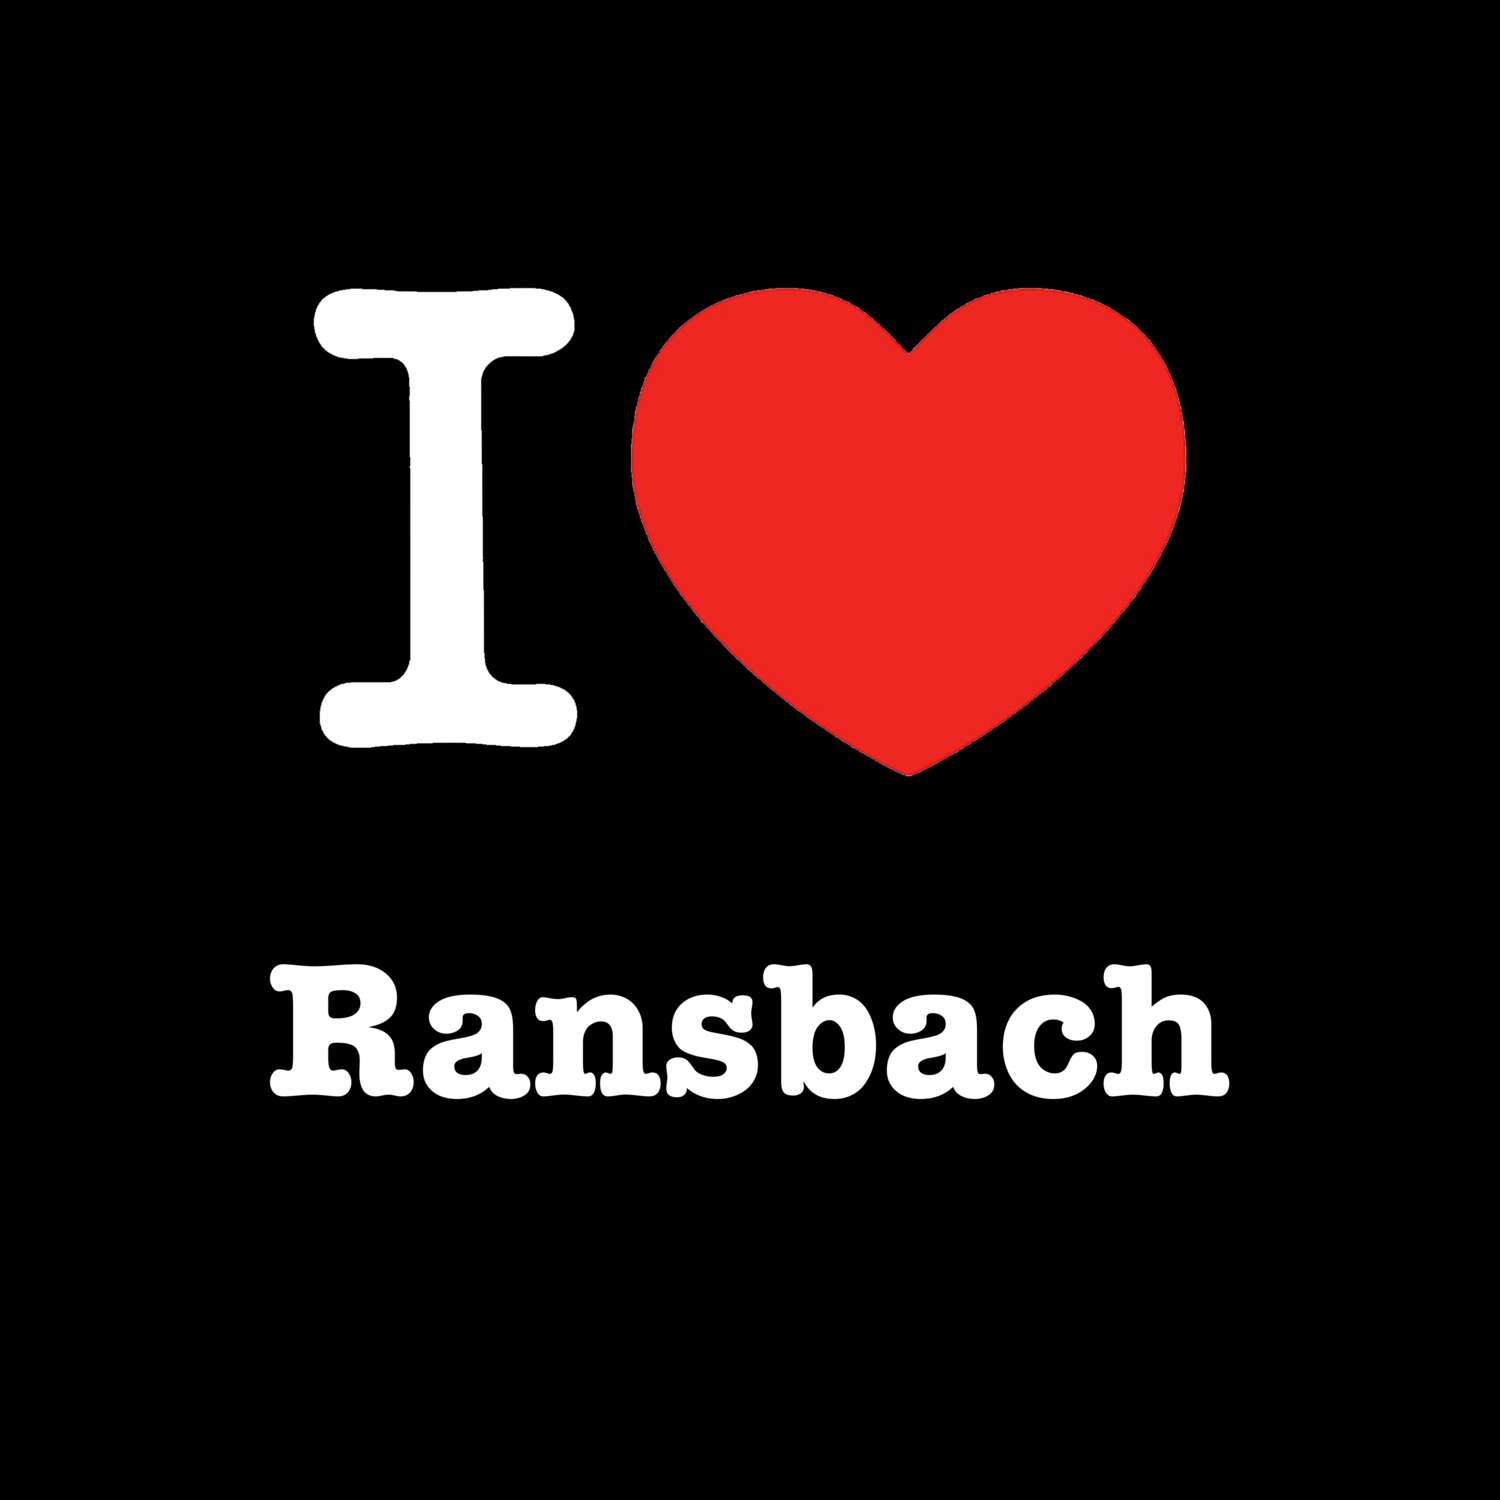 Ransbach T-Shirt »I love«